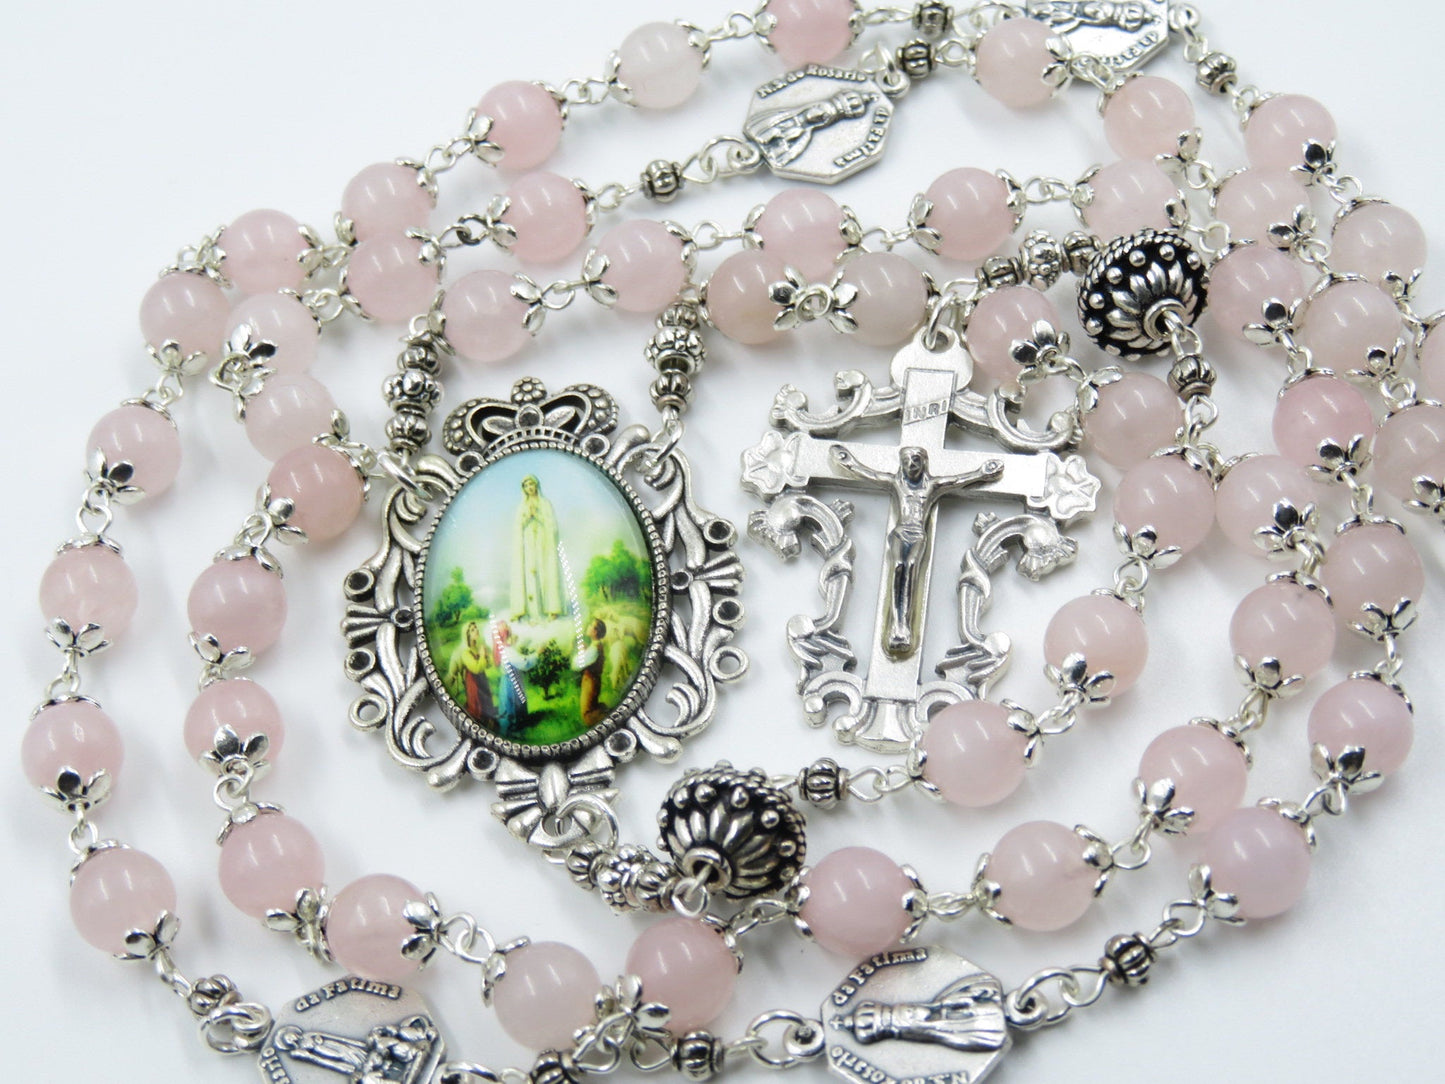 Stunning heirloom Fatima gemstone rosary beads, Rose quartz Gemstone rosaries, Holy rosaries, Religious wedding gift, Crucifix.